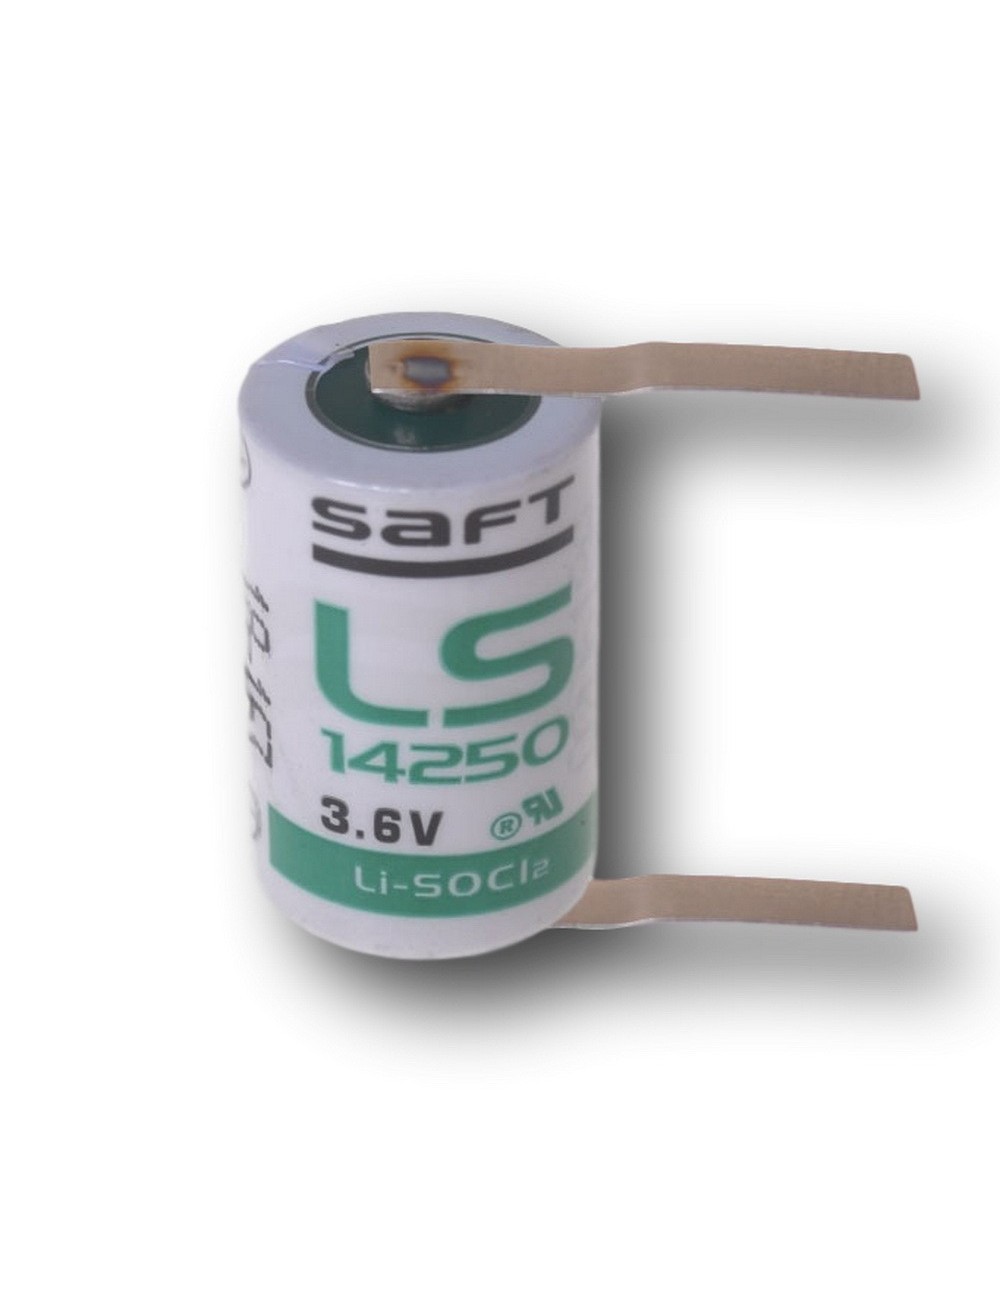 Lithium battery 3,6V 1,2Ah LS 14250 CNR (04227A)